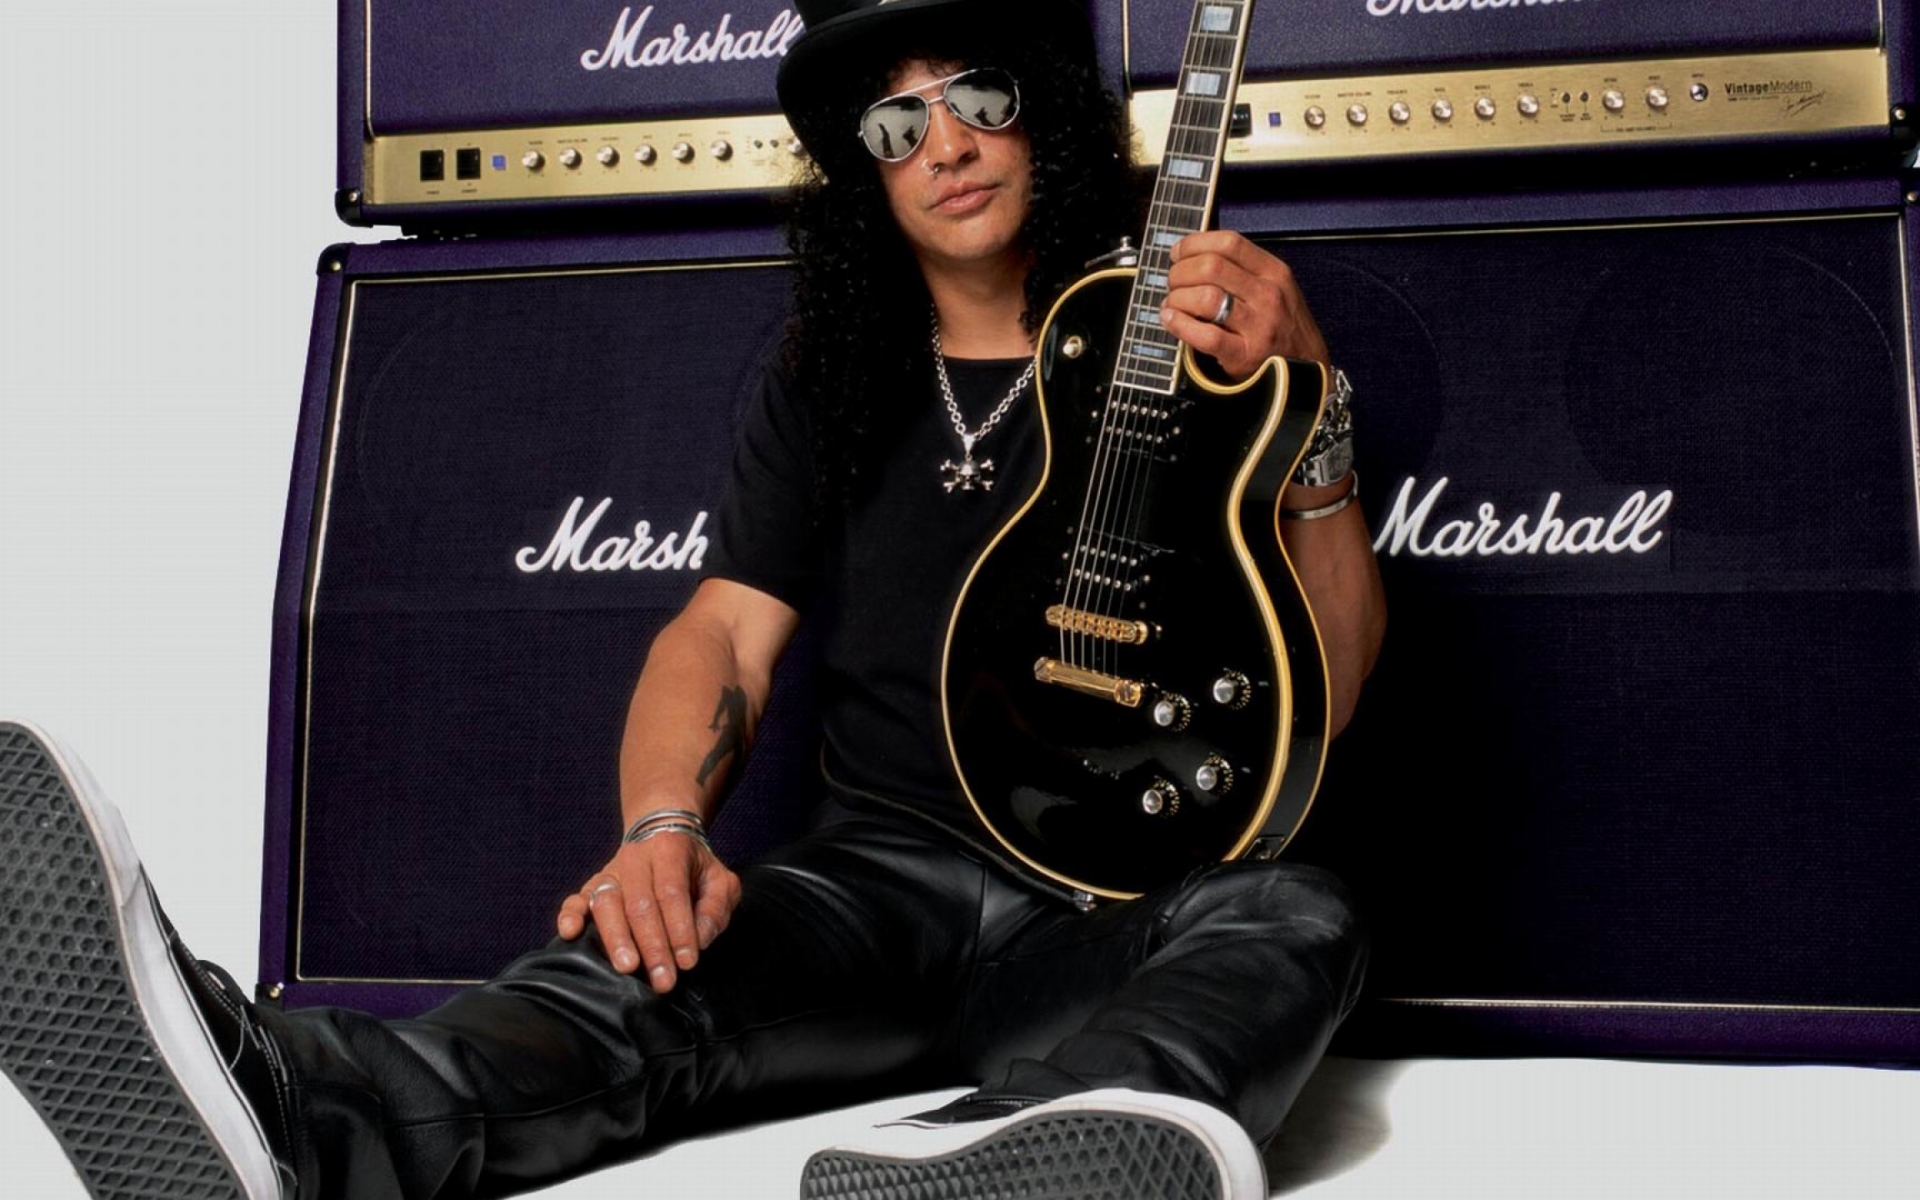 Guns N' Roses guitarist Slash kicks off new Gibson book series 